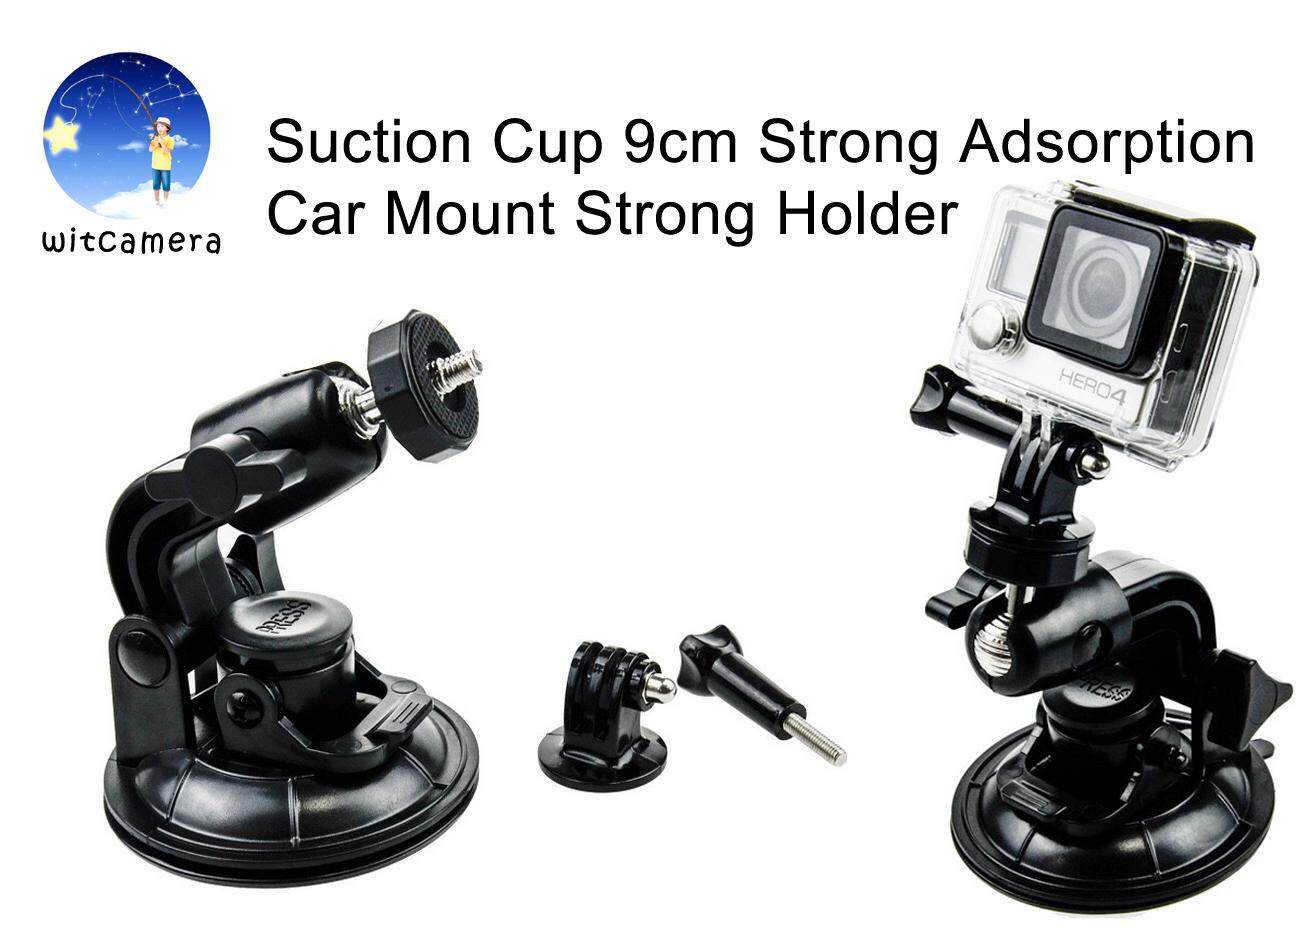 Suction Cup 9cm Strong Adsorption Car Mount for GoPro Acation Camera Hero models Sjcam , Xiao YI  Suction Mounts Strong Holder จุกดูด 9 เซนติเมตรการดูดซับกำลังสูงรถขายึดกล้องโกโปร Acation Camera Hero all models SJcam , Xiao YI   Mounts S